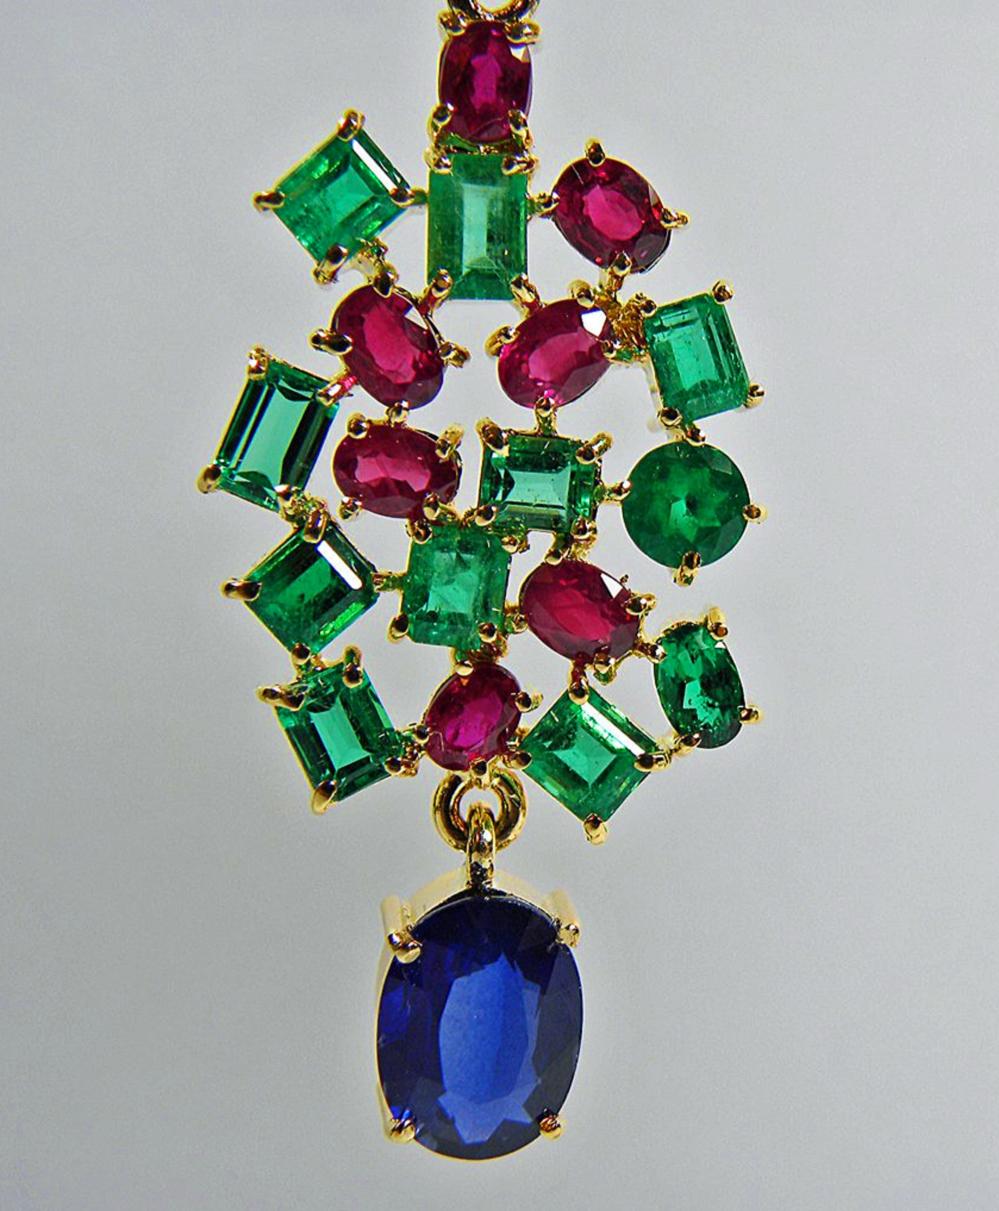 Oval Cut  19.36 Carat Sapphire, Emerald, Ruby Chandeliers Earrings One of a Kind  For Sale